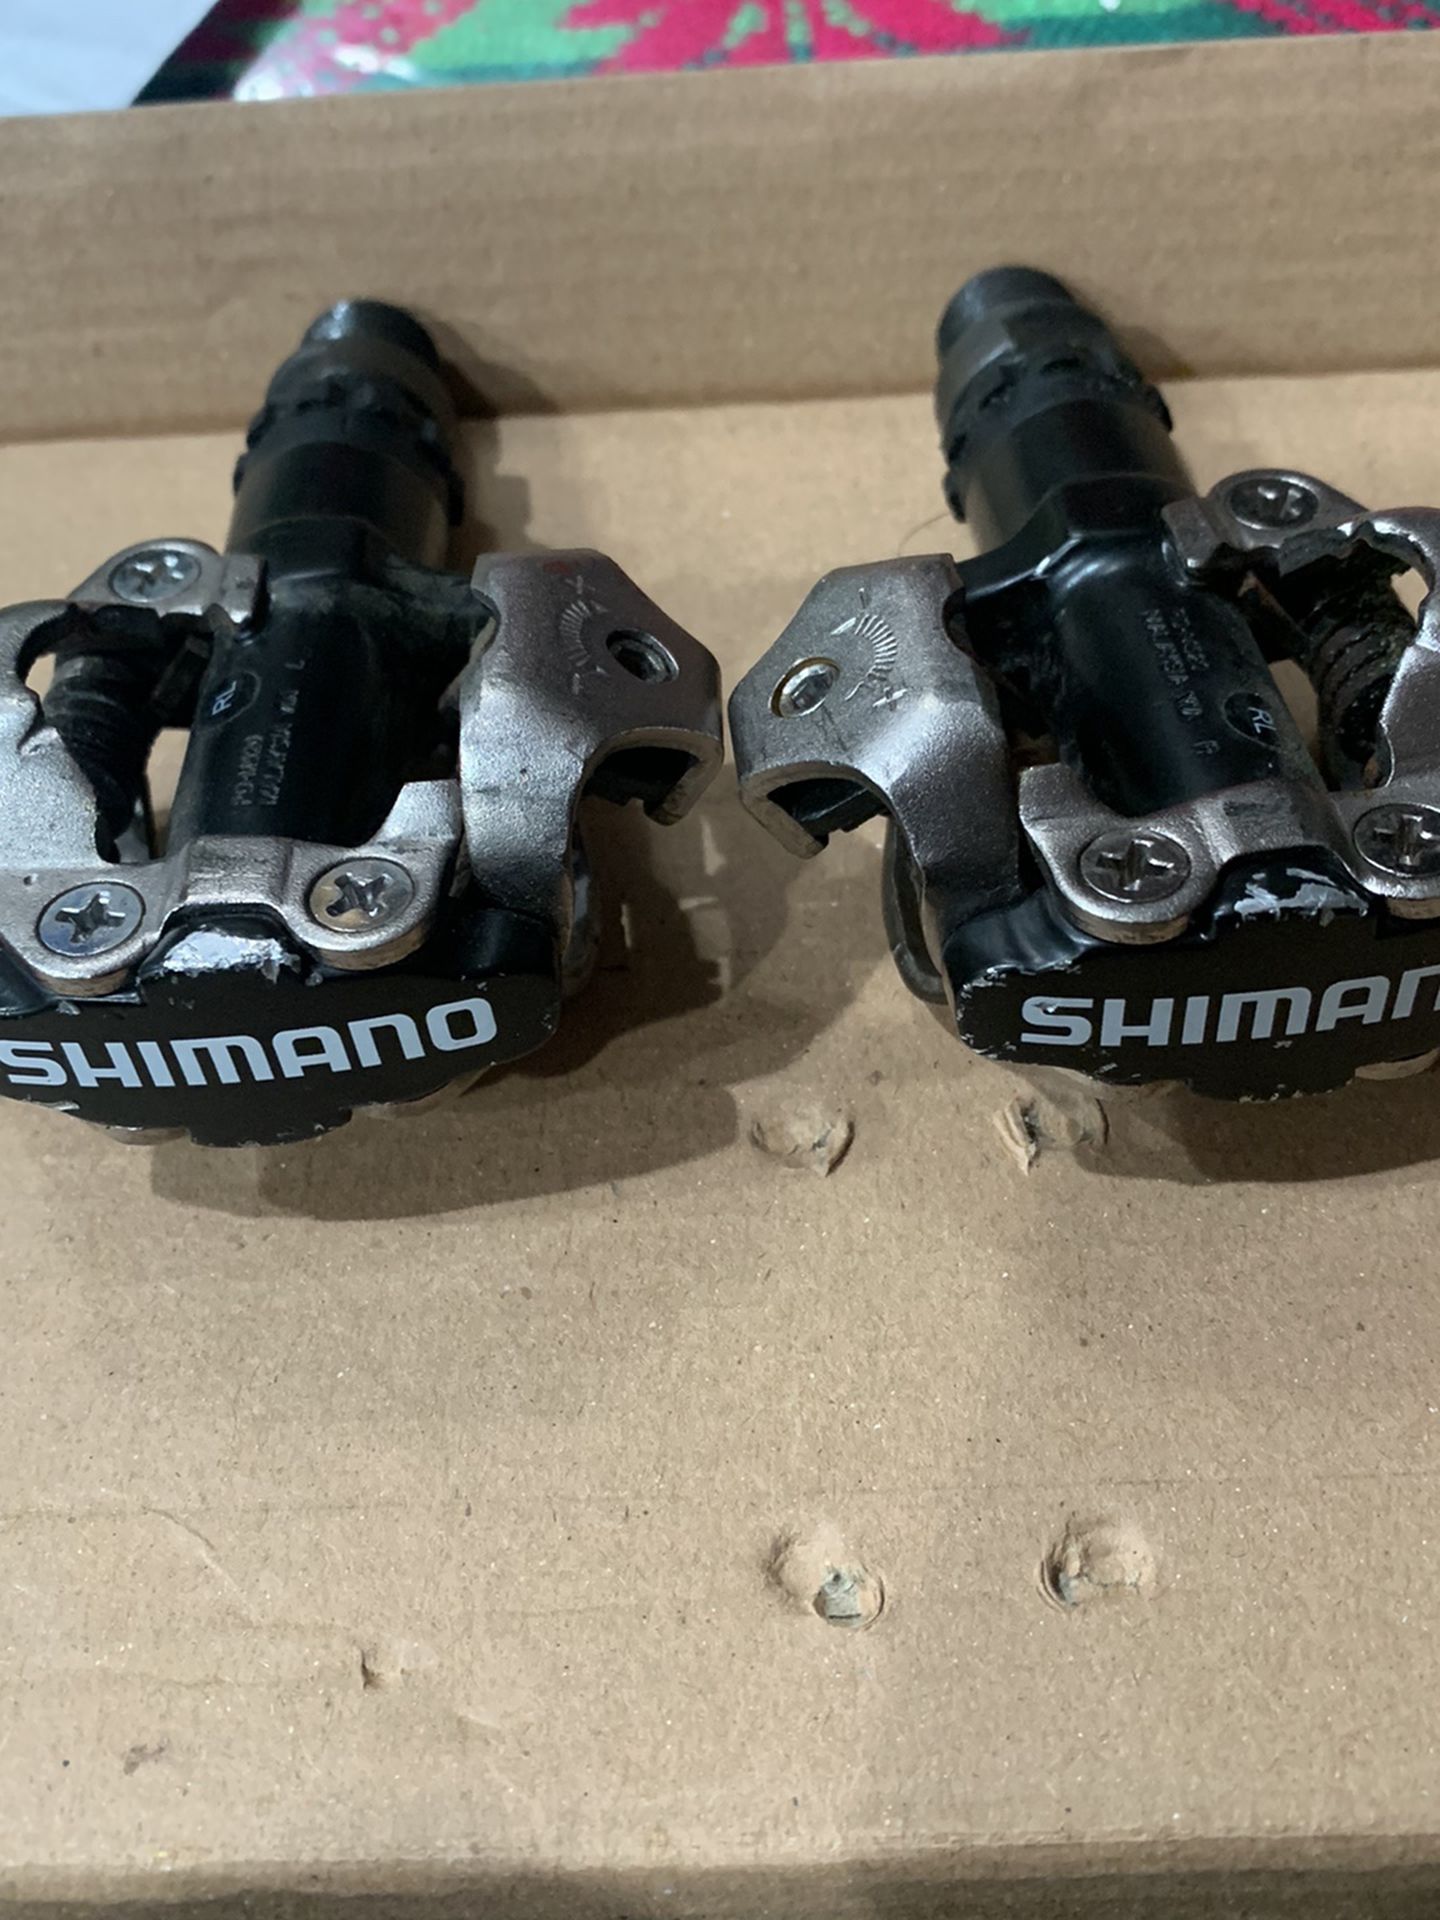 Shimano Pedals